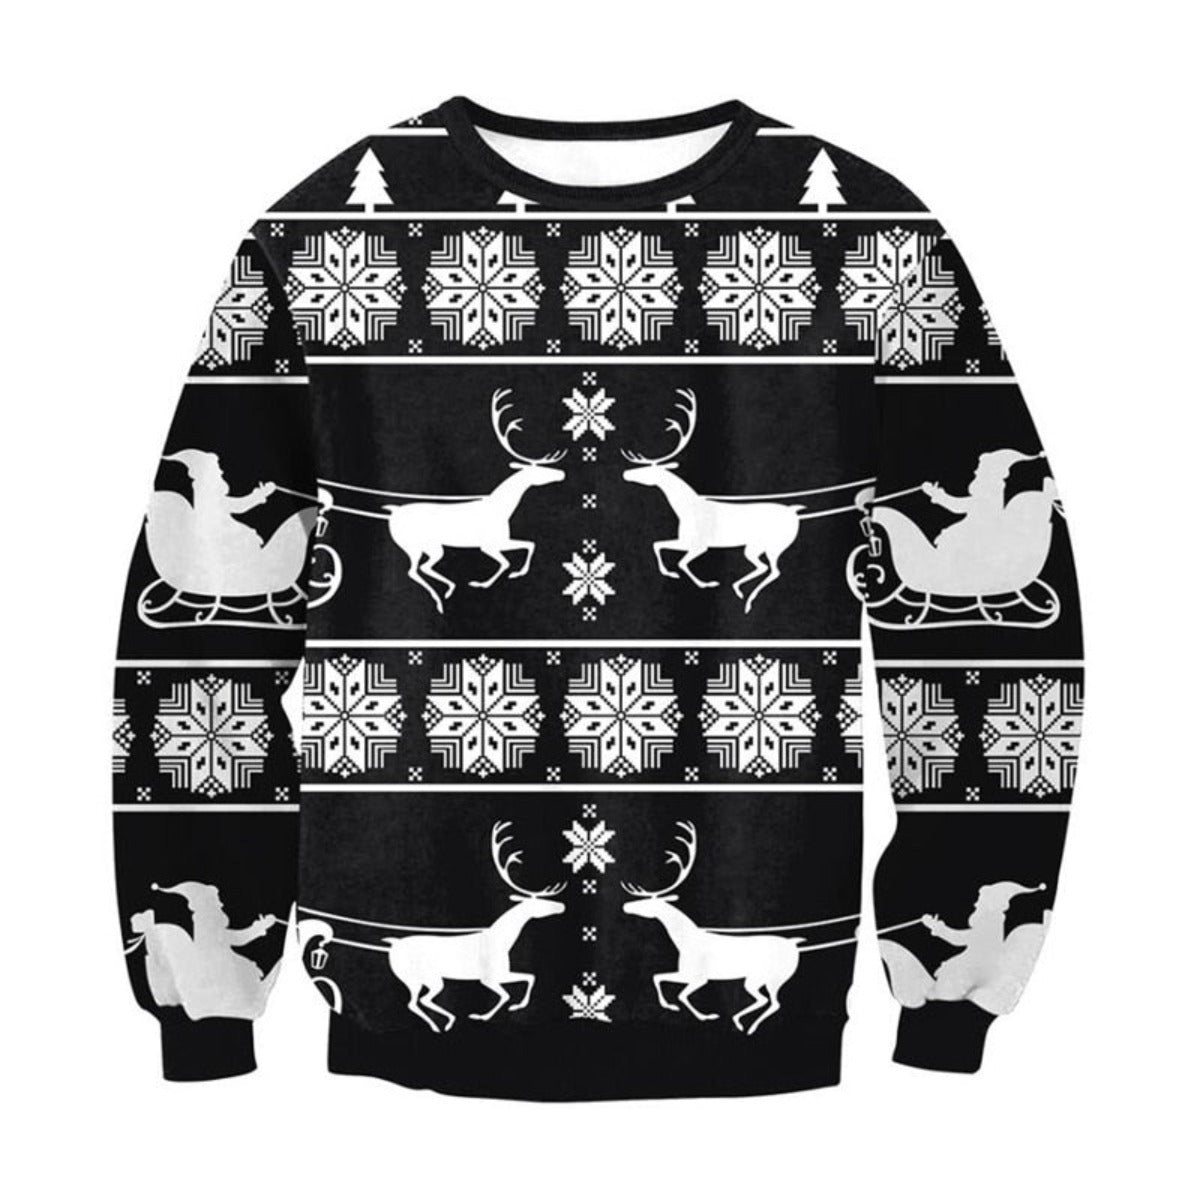 Snowflakes and Santa Sleigh Ugly Christmas Sweater